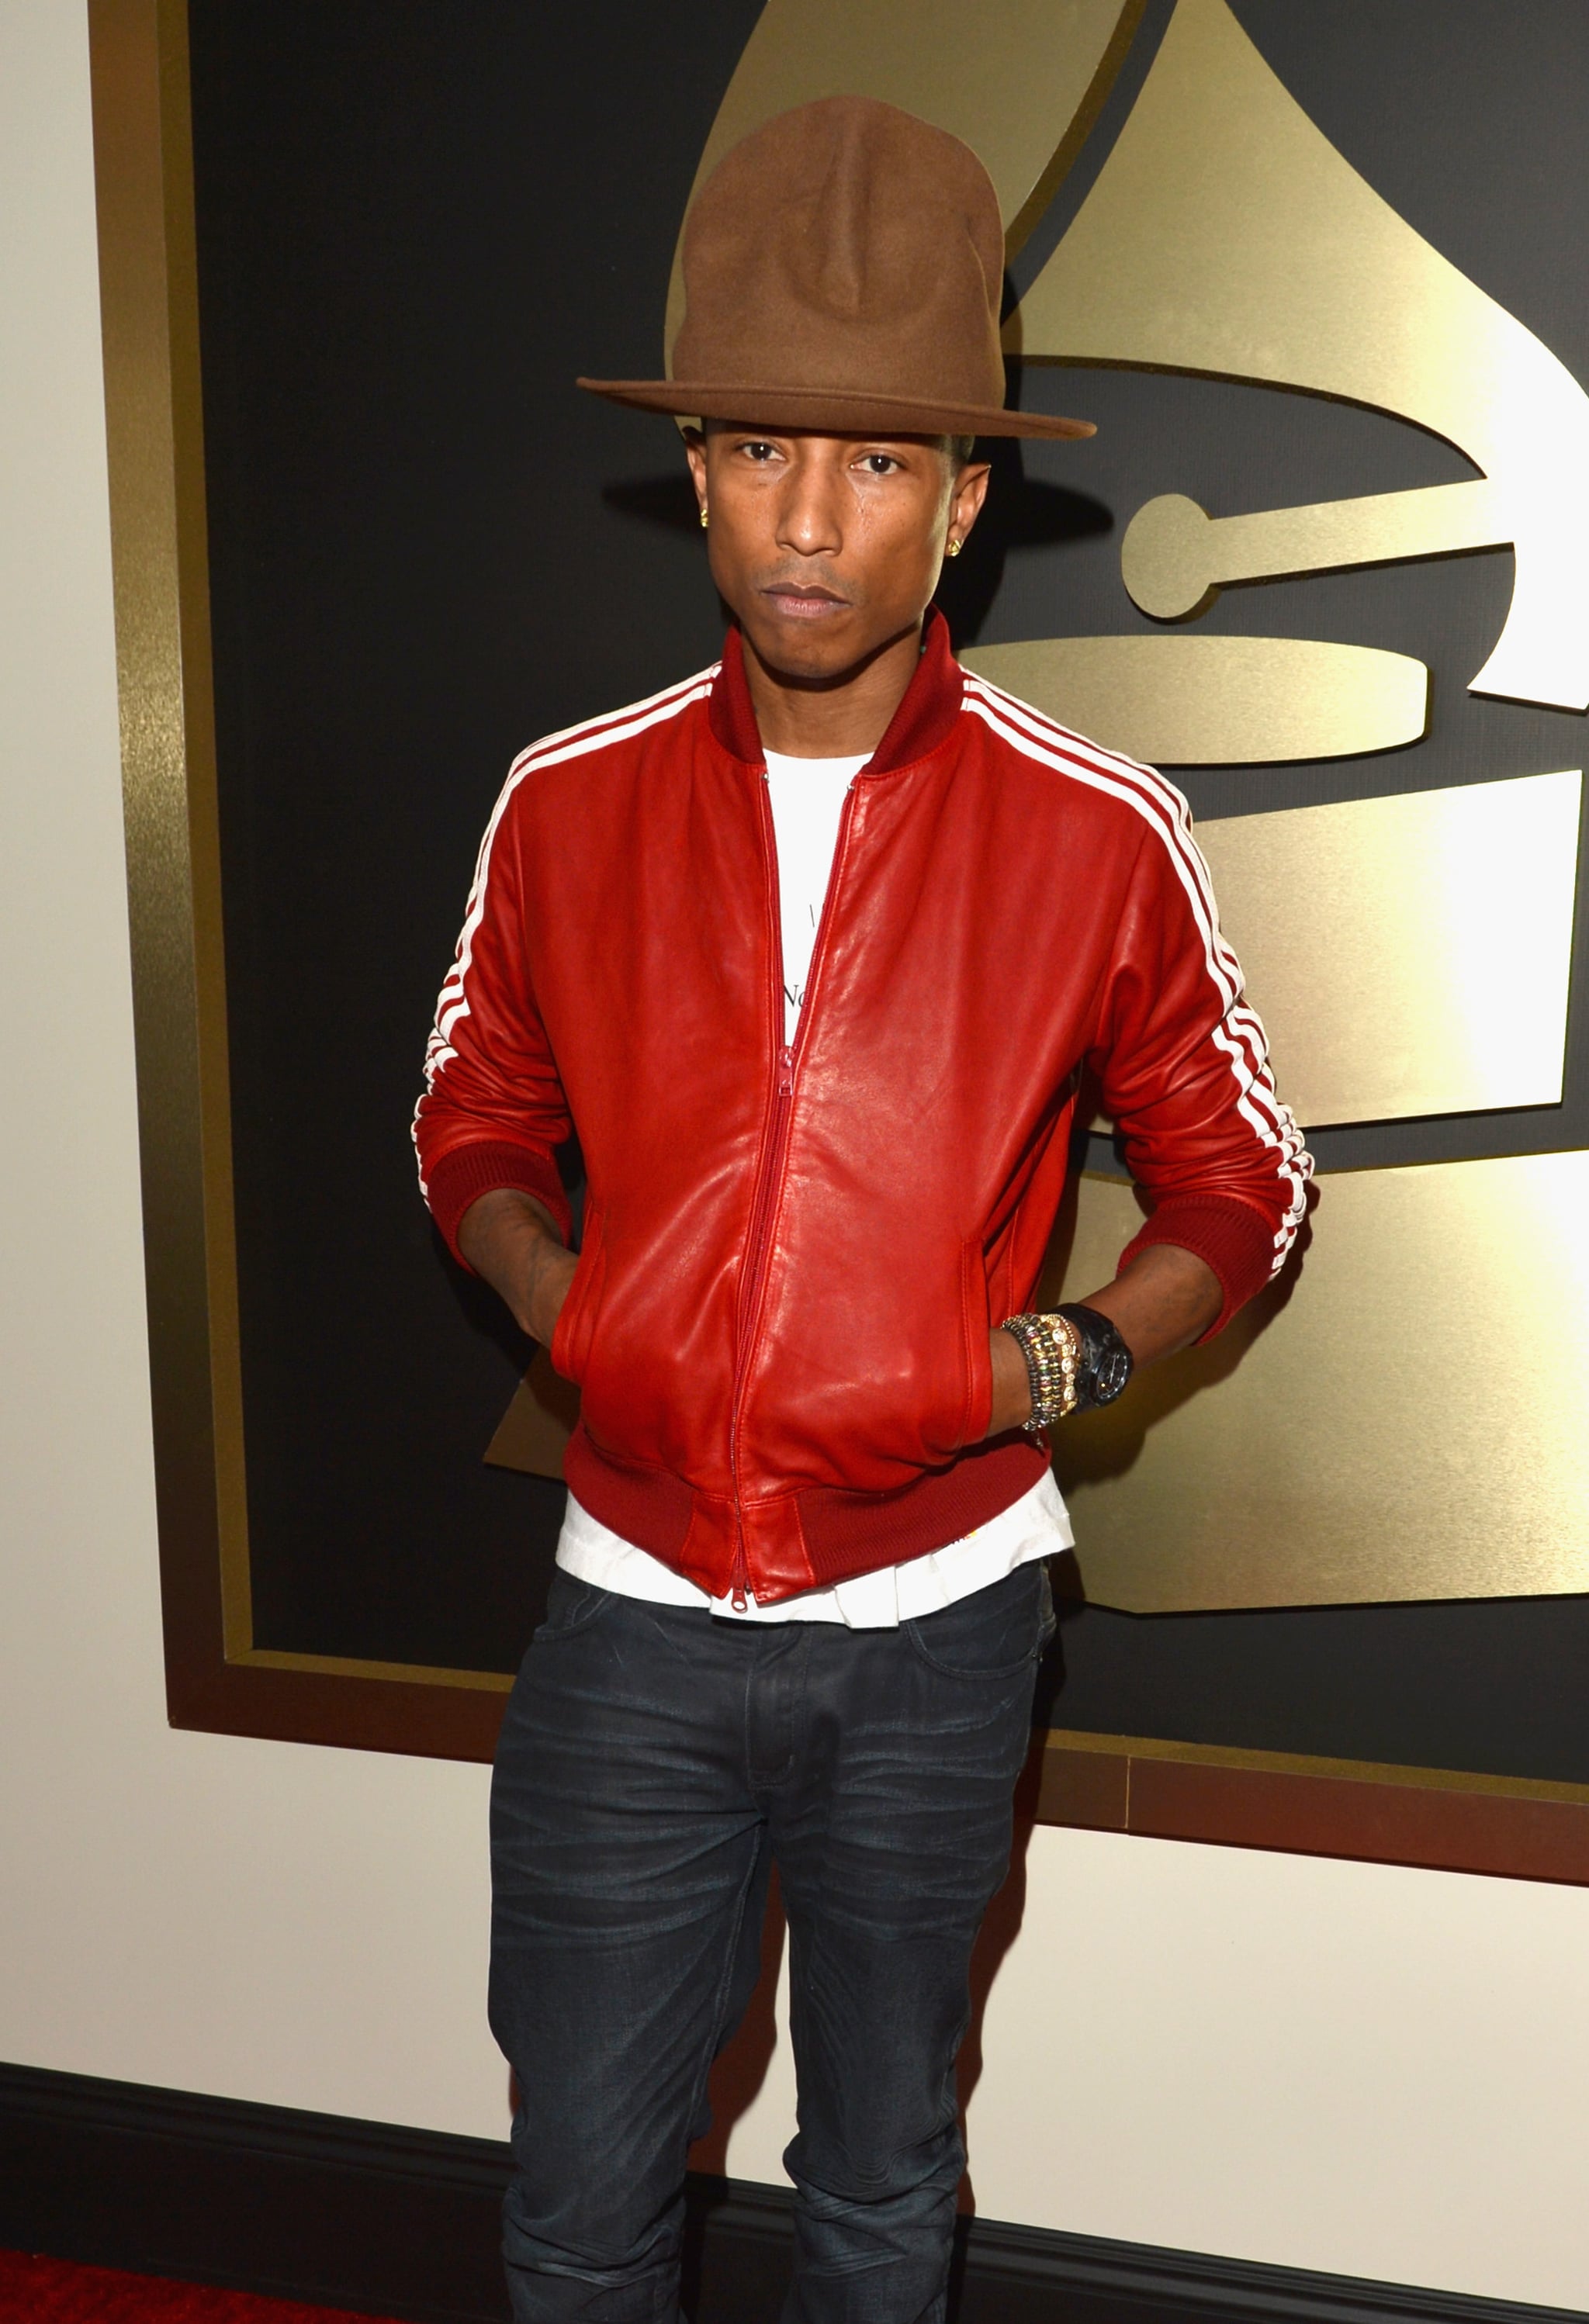 Pharrell Williams Grammys Awards Red Jacket